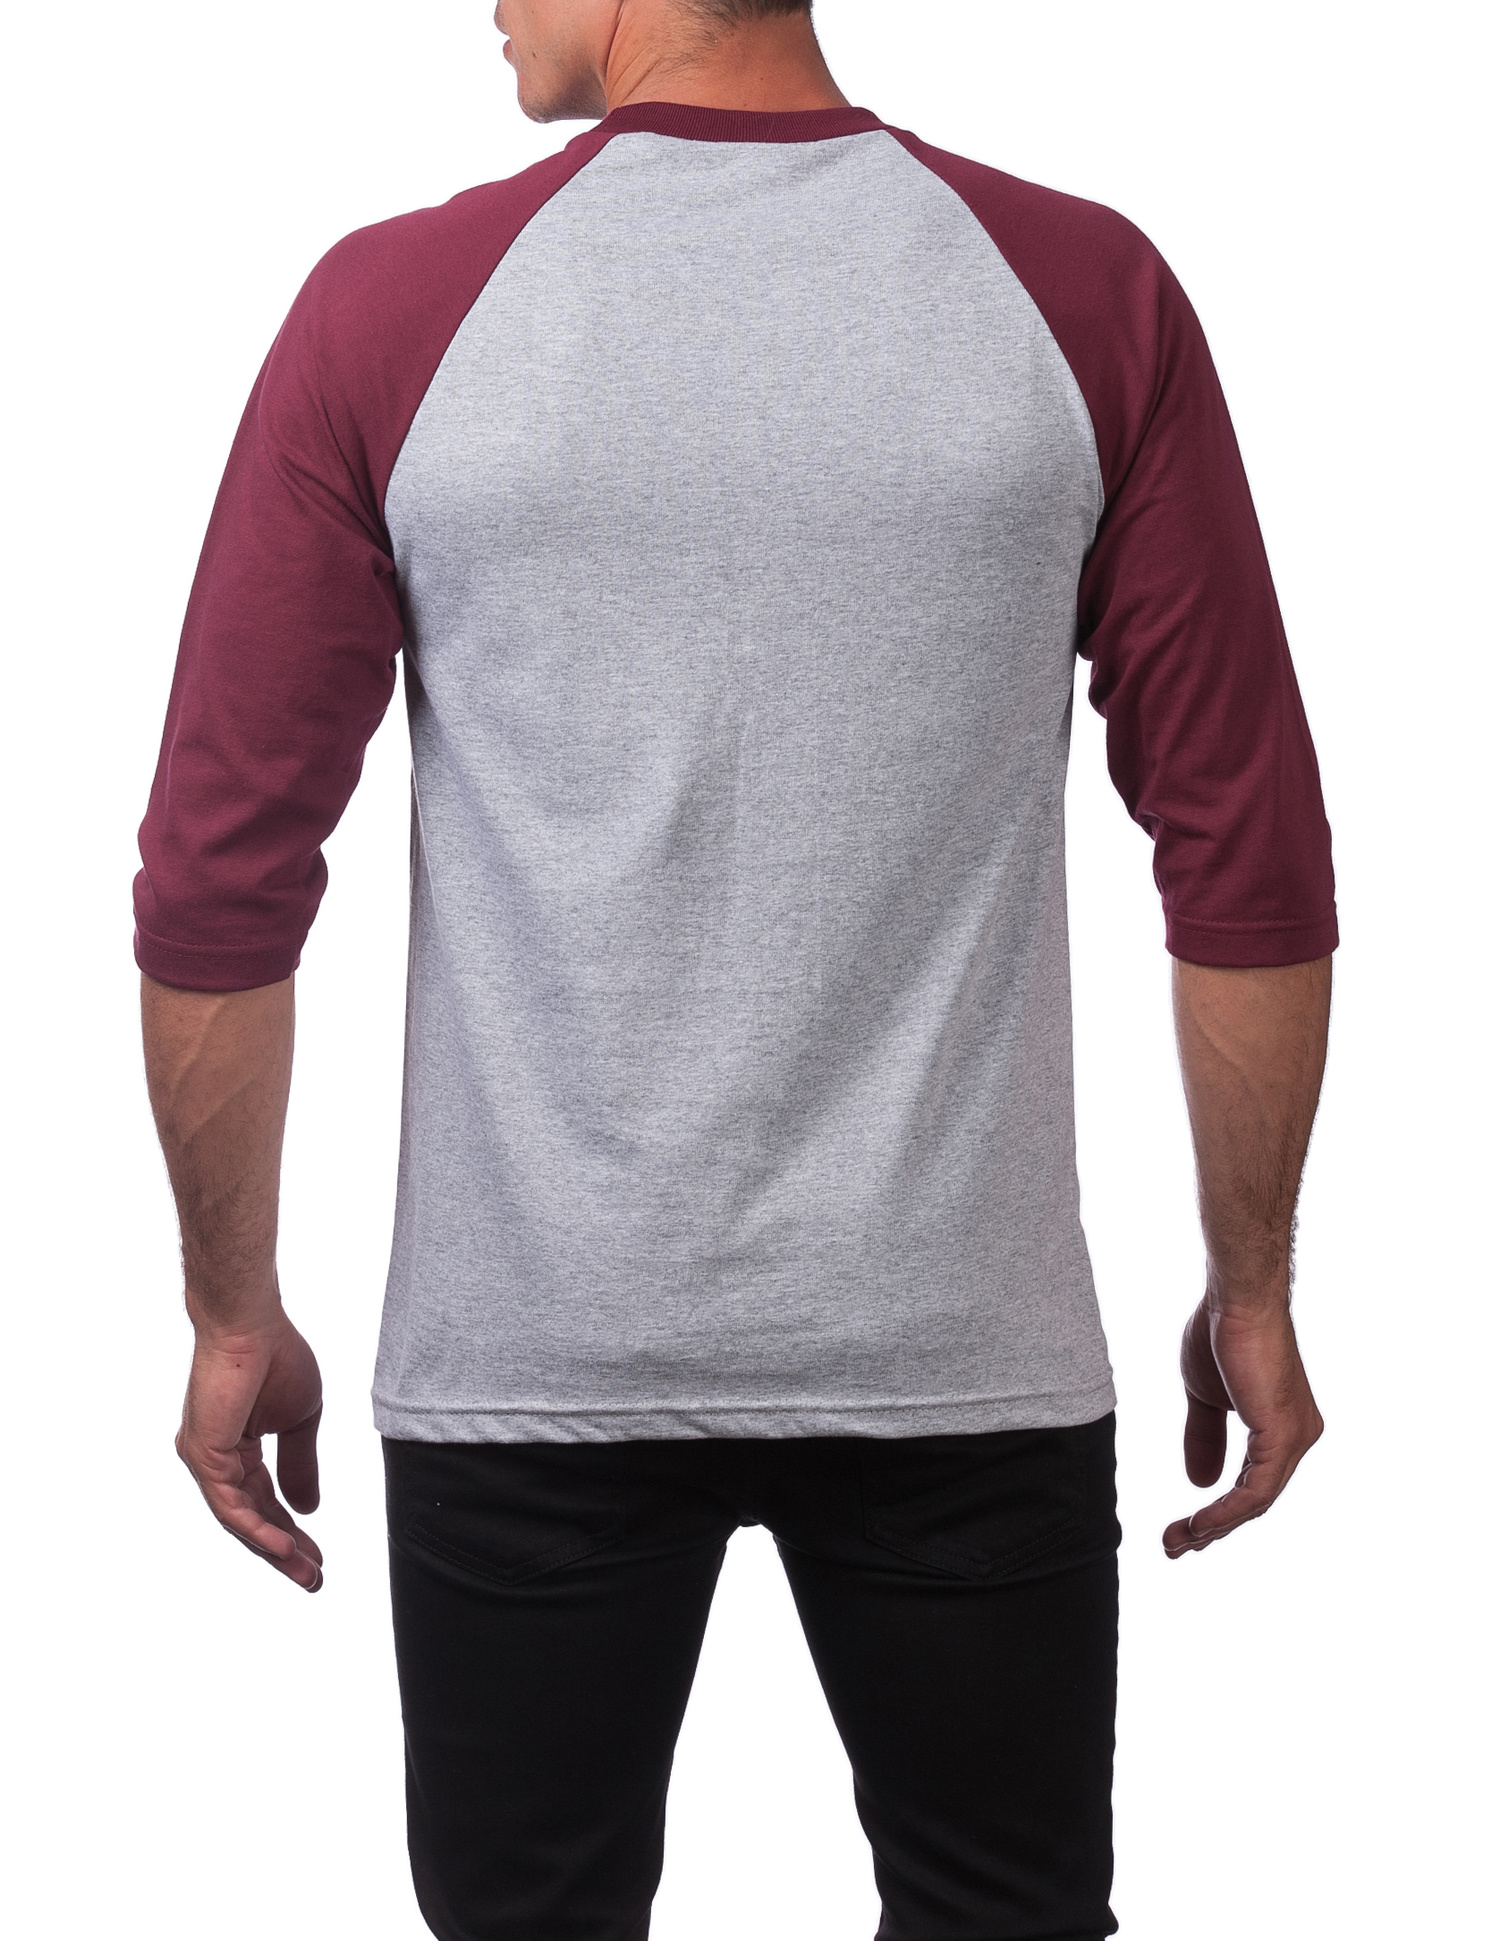 Baseball Club Bravos de Leon T-Shirt for Men's Color Gray 100